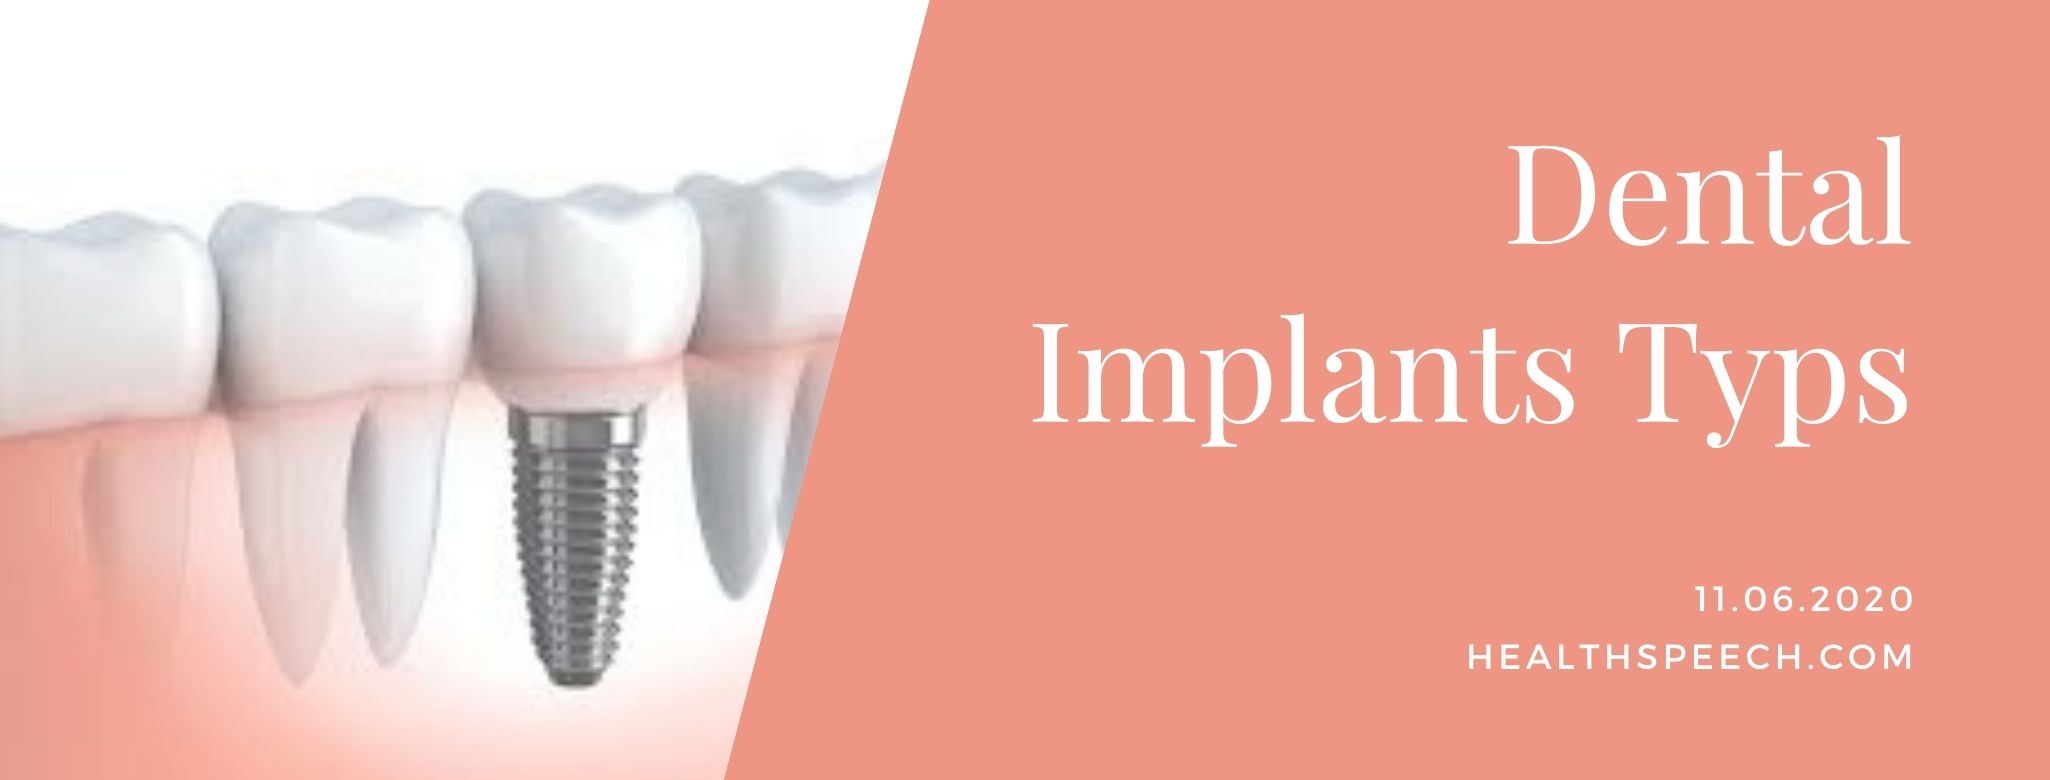 Types of dental implants, techniques & risks